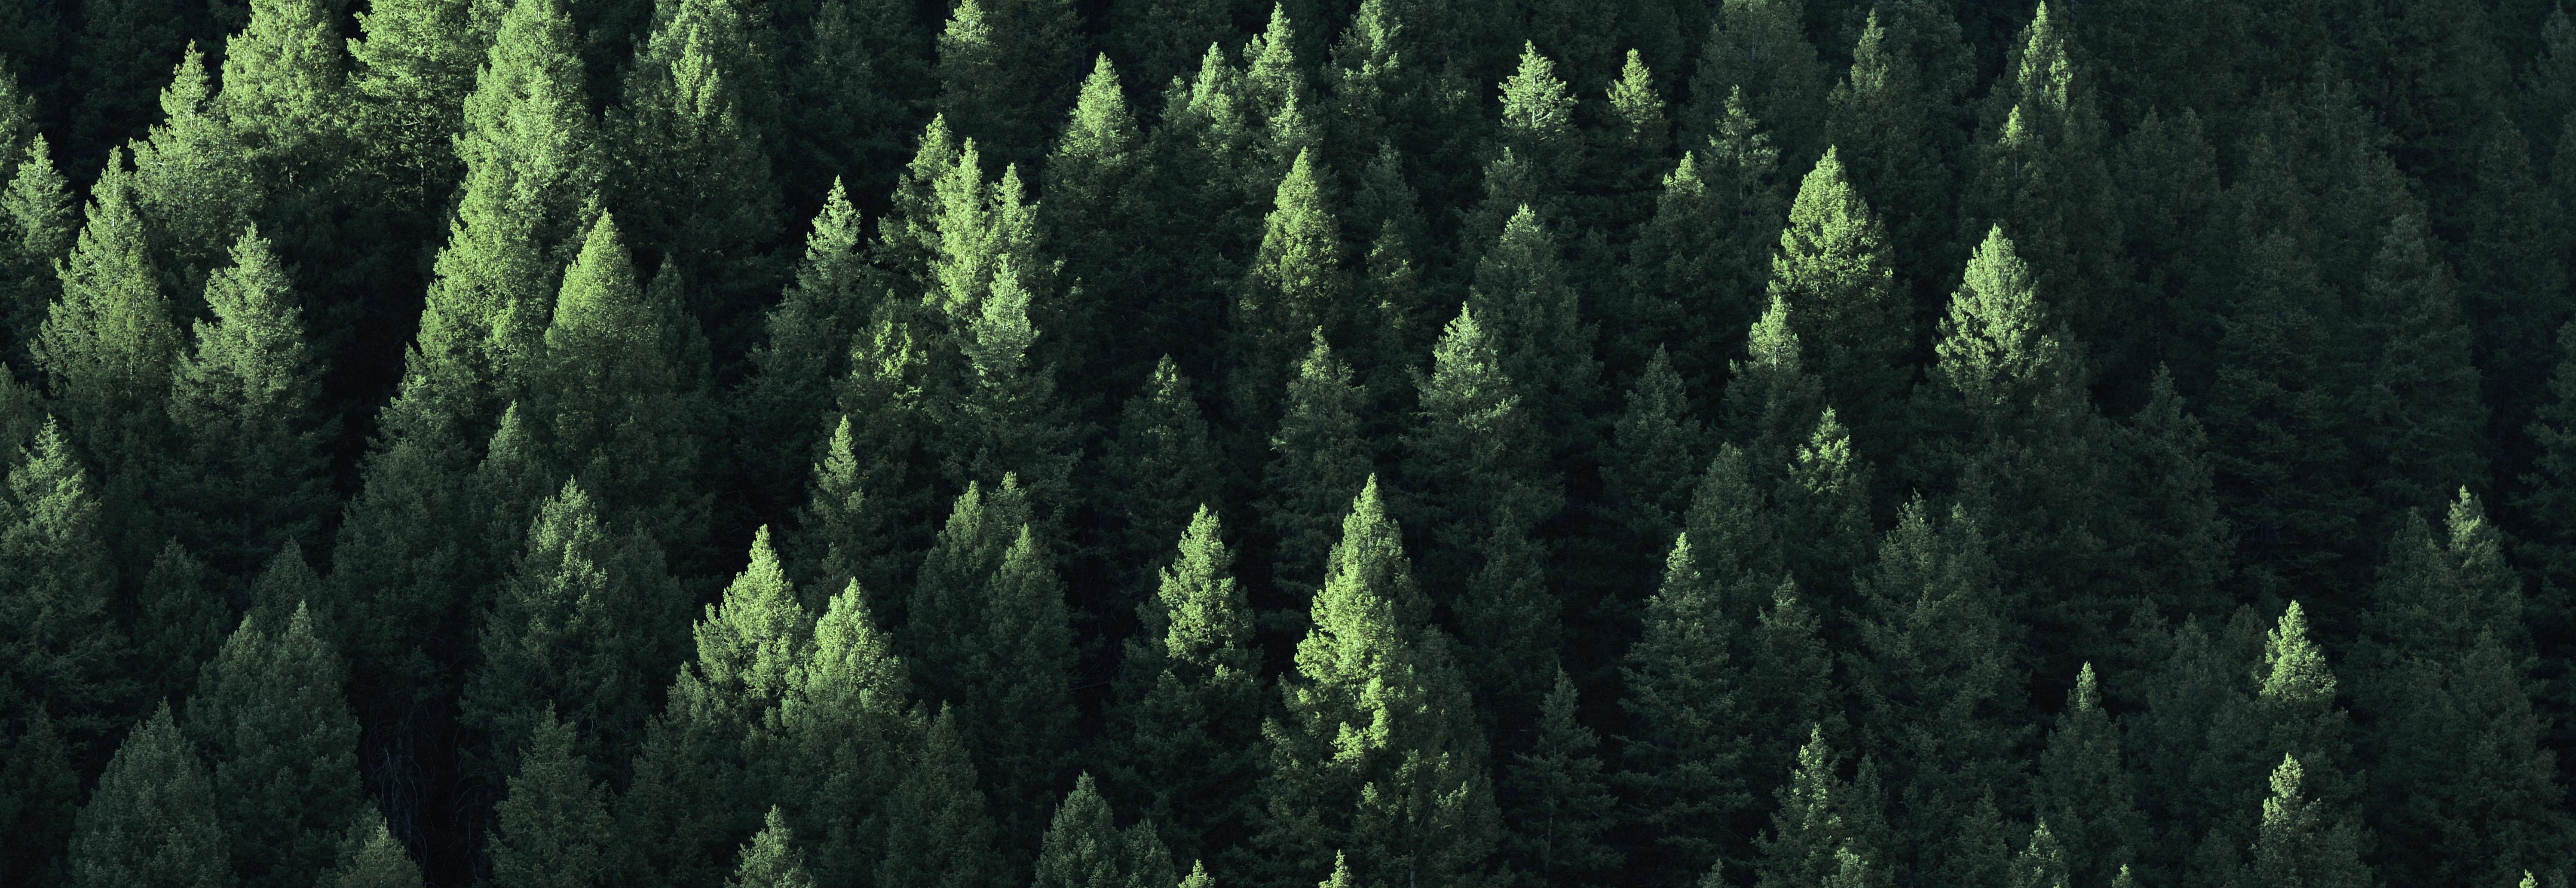 Pine trees in shadow © Lane Erickson, Adobe stock